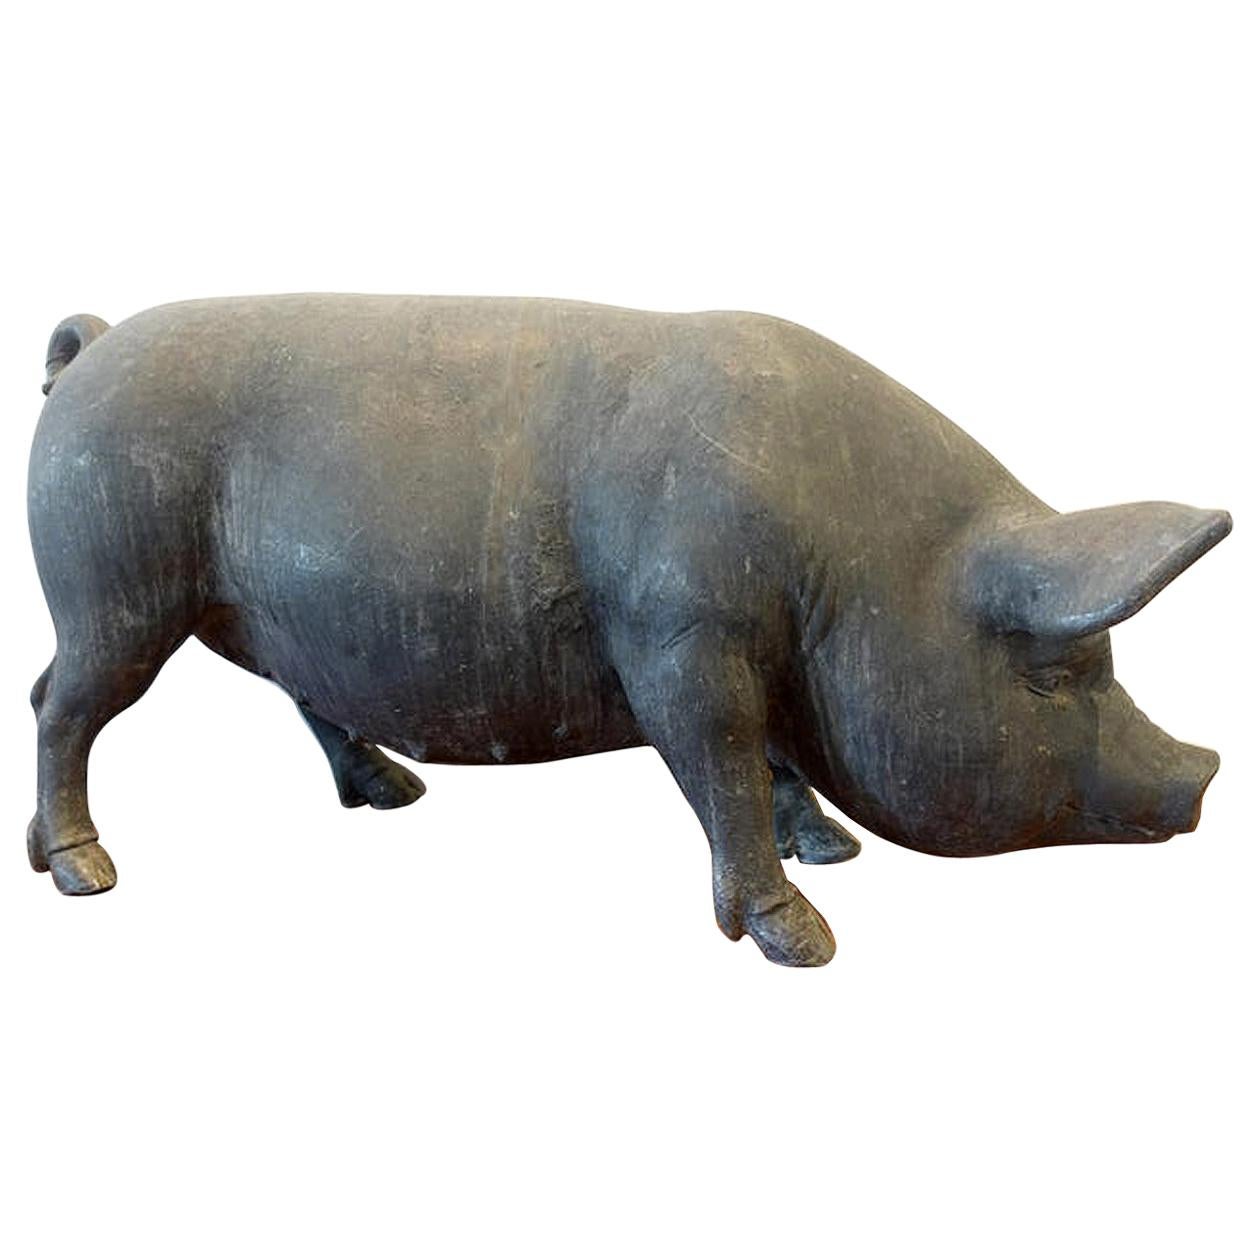 Antique English Lead Pig Sculpture